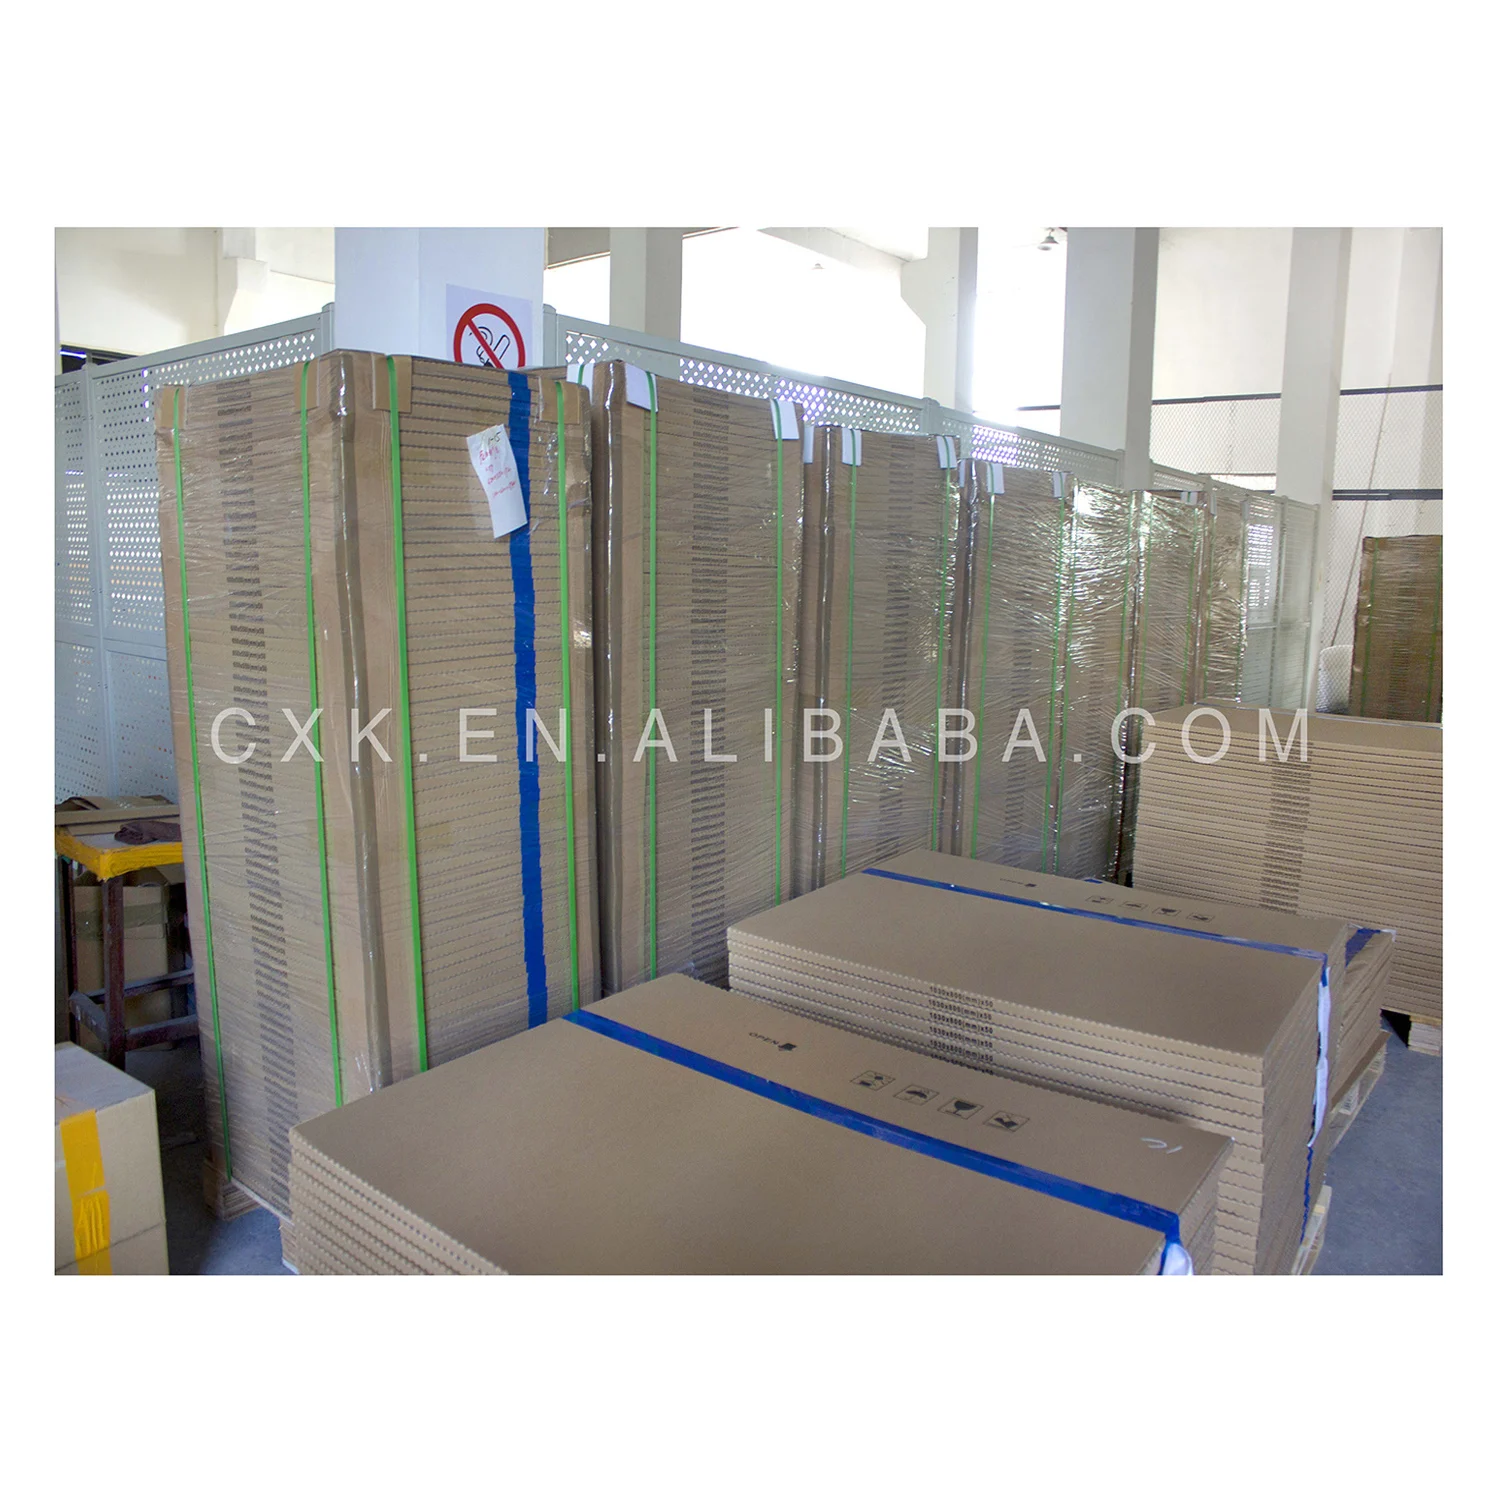 CXK-K1 Newspaper Printing Positive Thermal Plate Offset Printing CTCP Plate Thermal CTP Plate